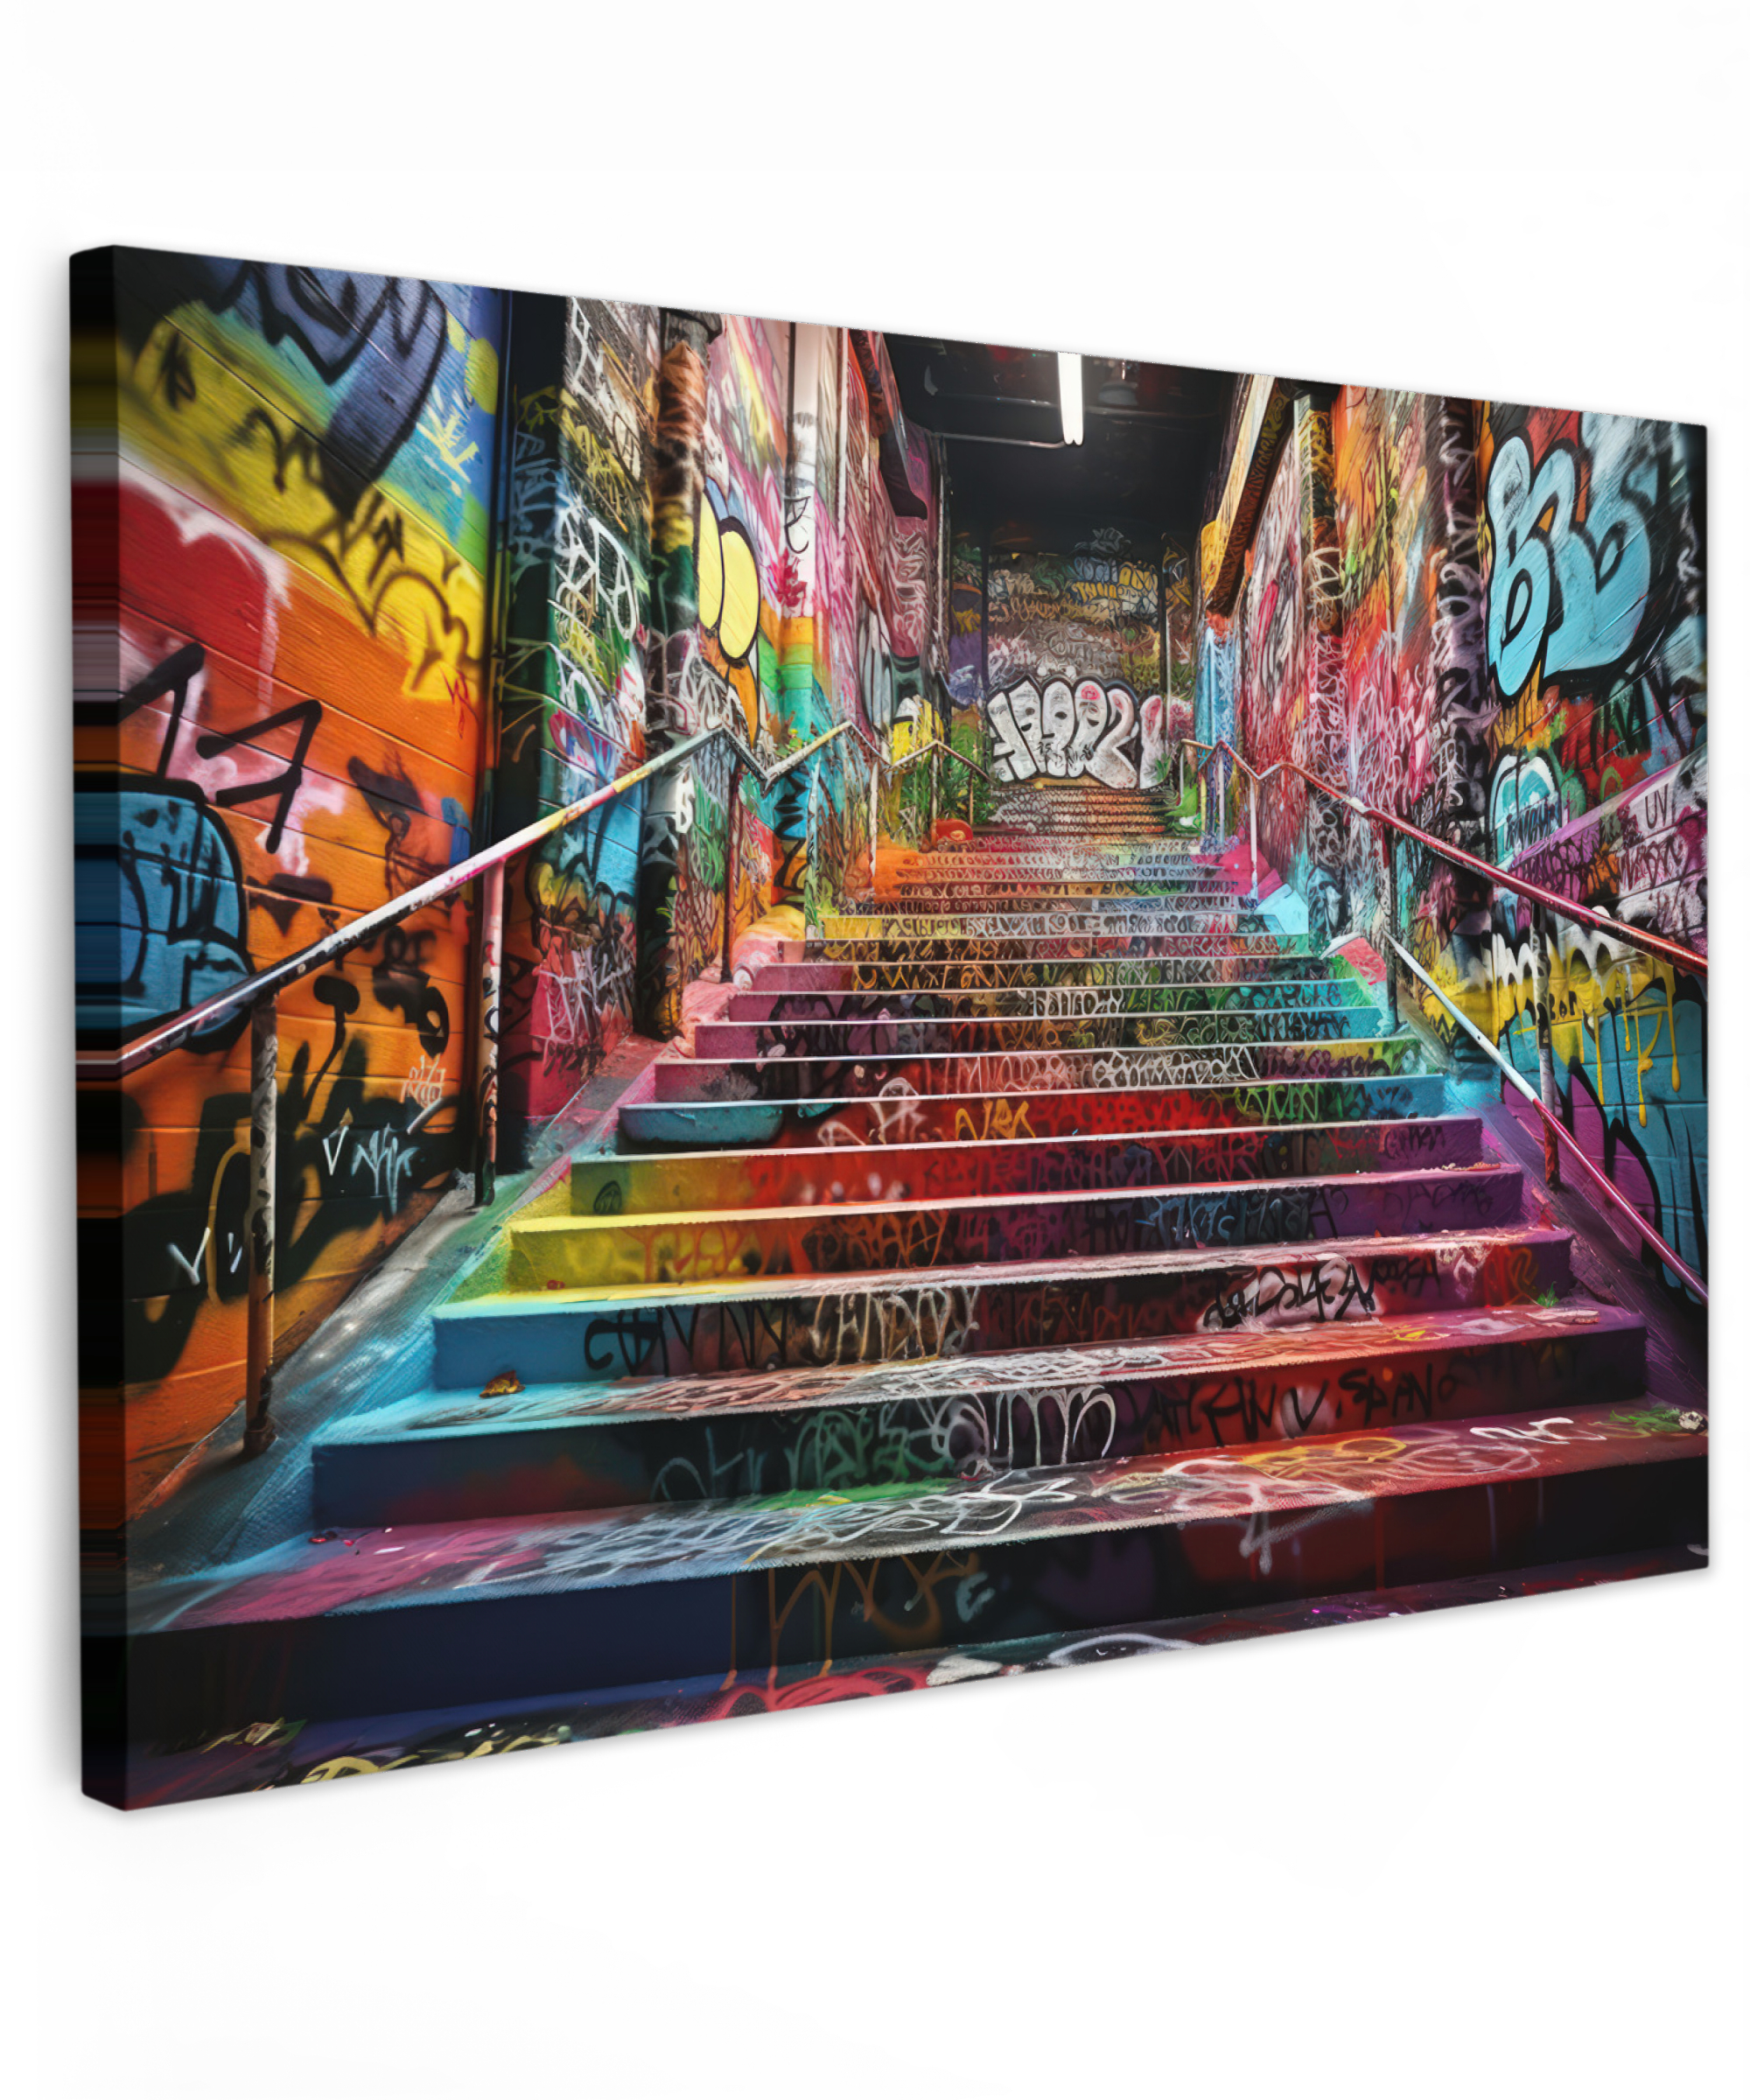 Leinwandbild - Treppe - Graffiti - Farben - Kunst